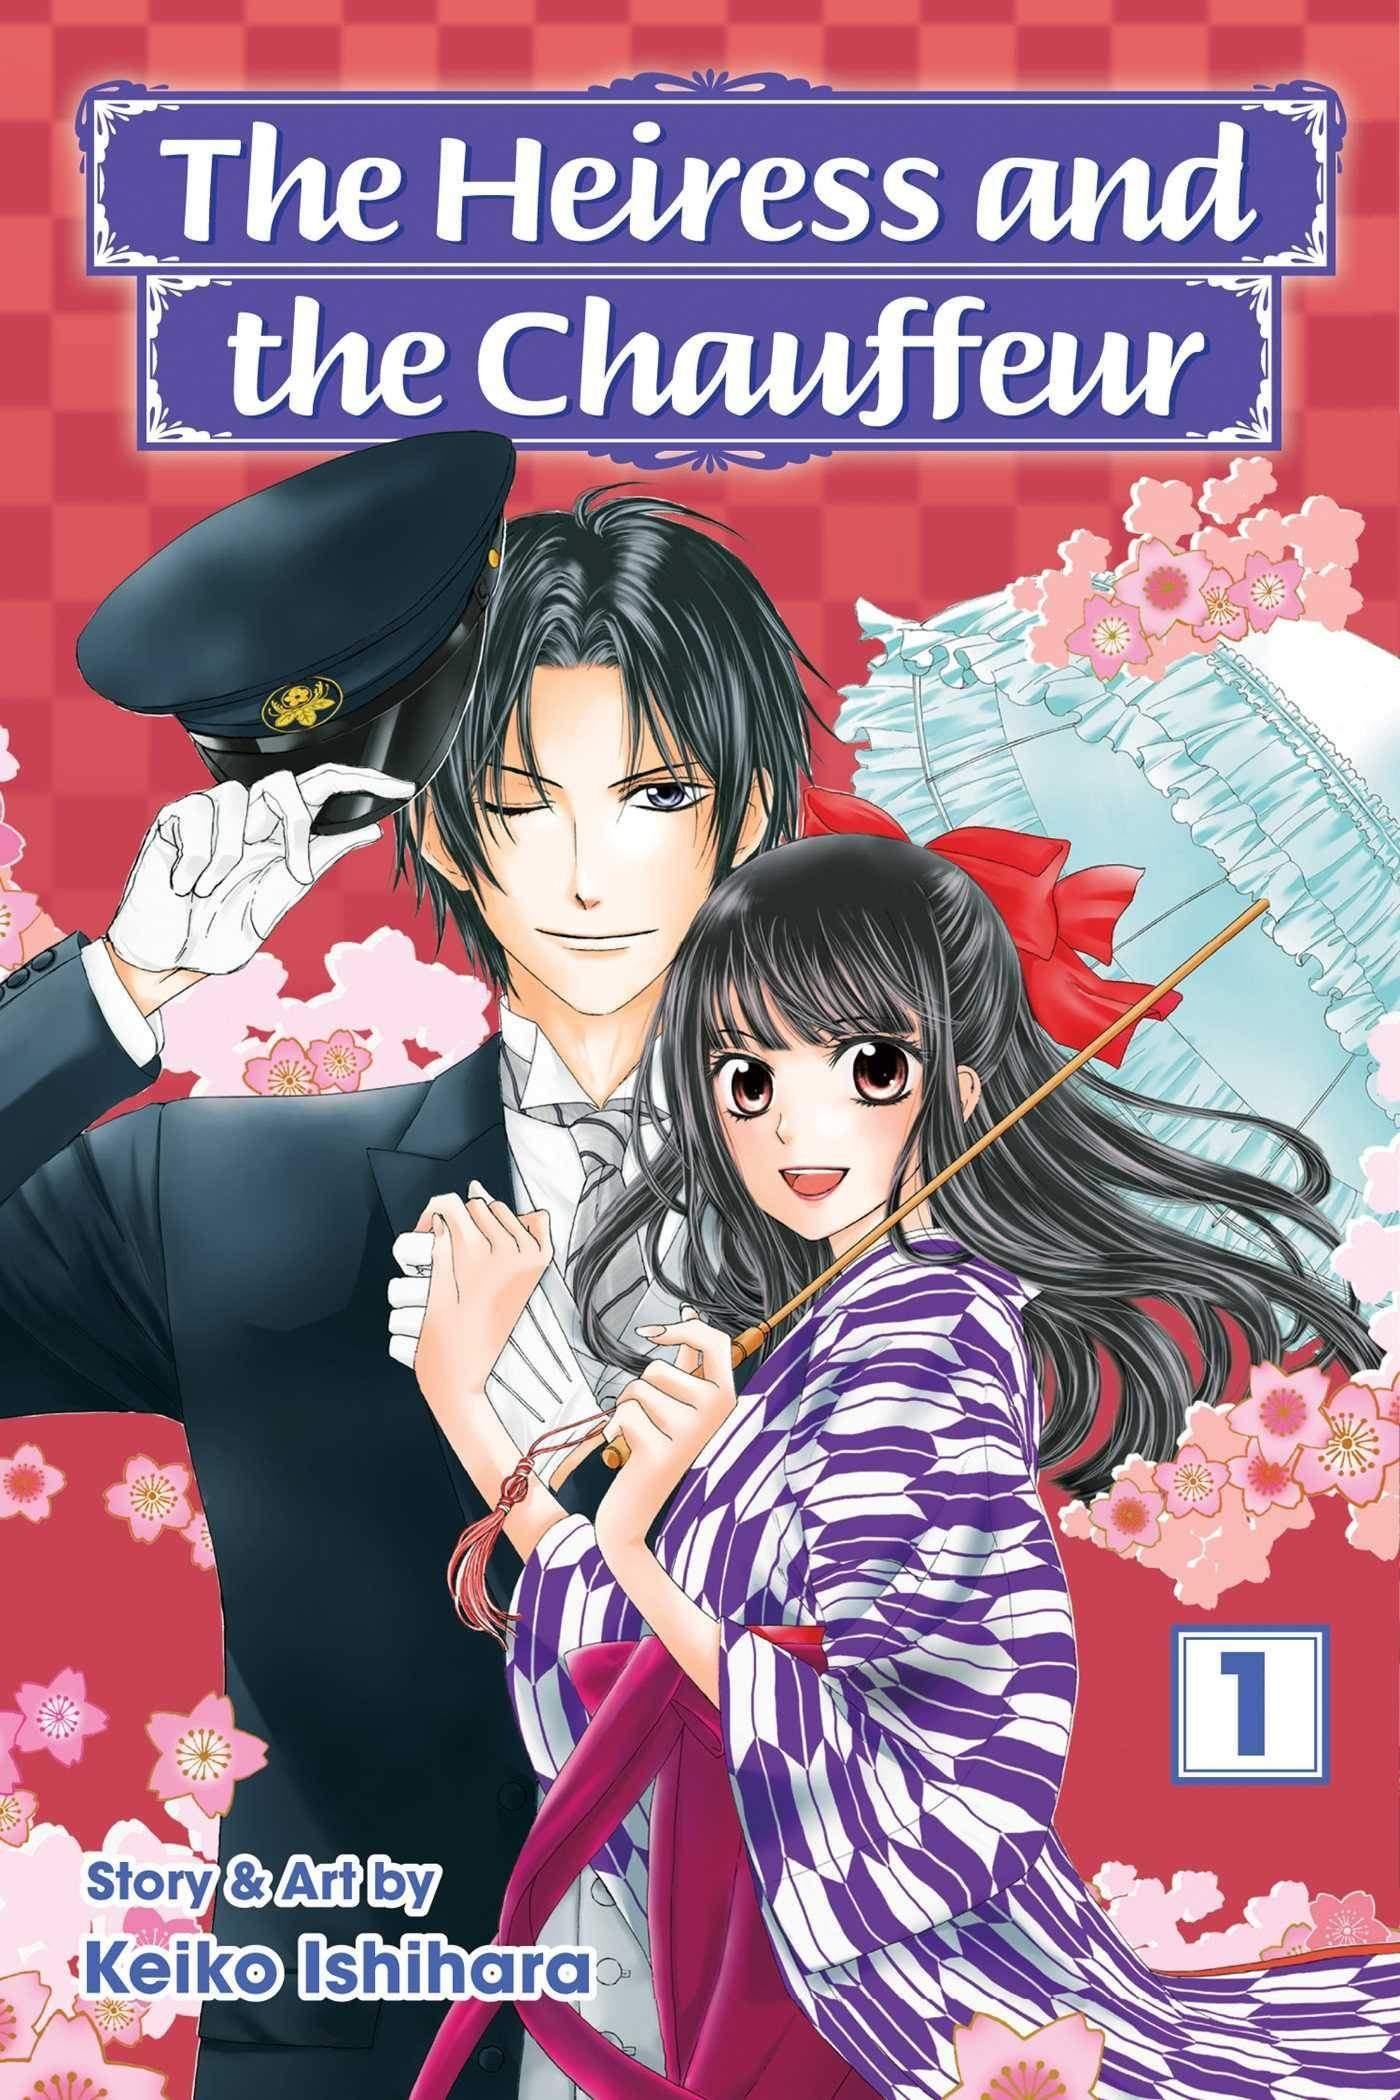 The Heiress and the Chauffeur (Manga) Vol. 1 - Tankobonbon